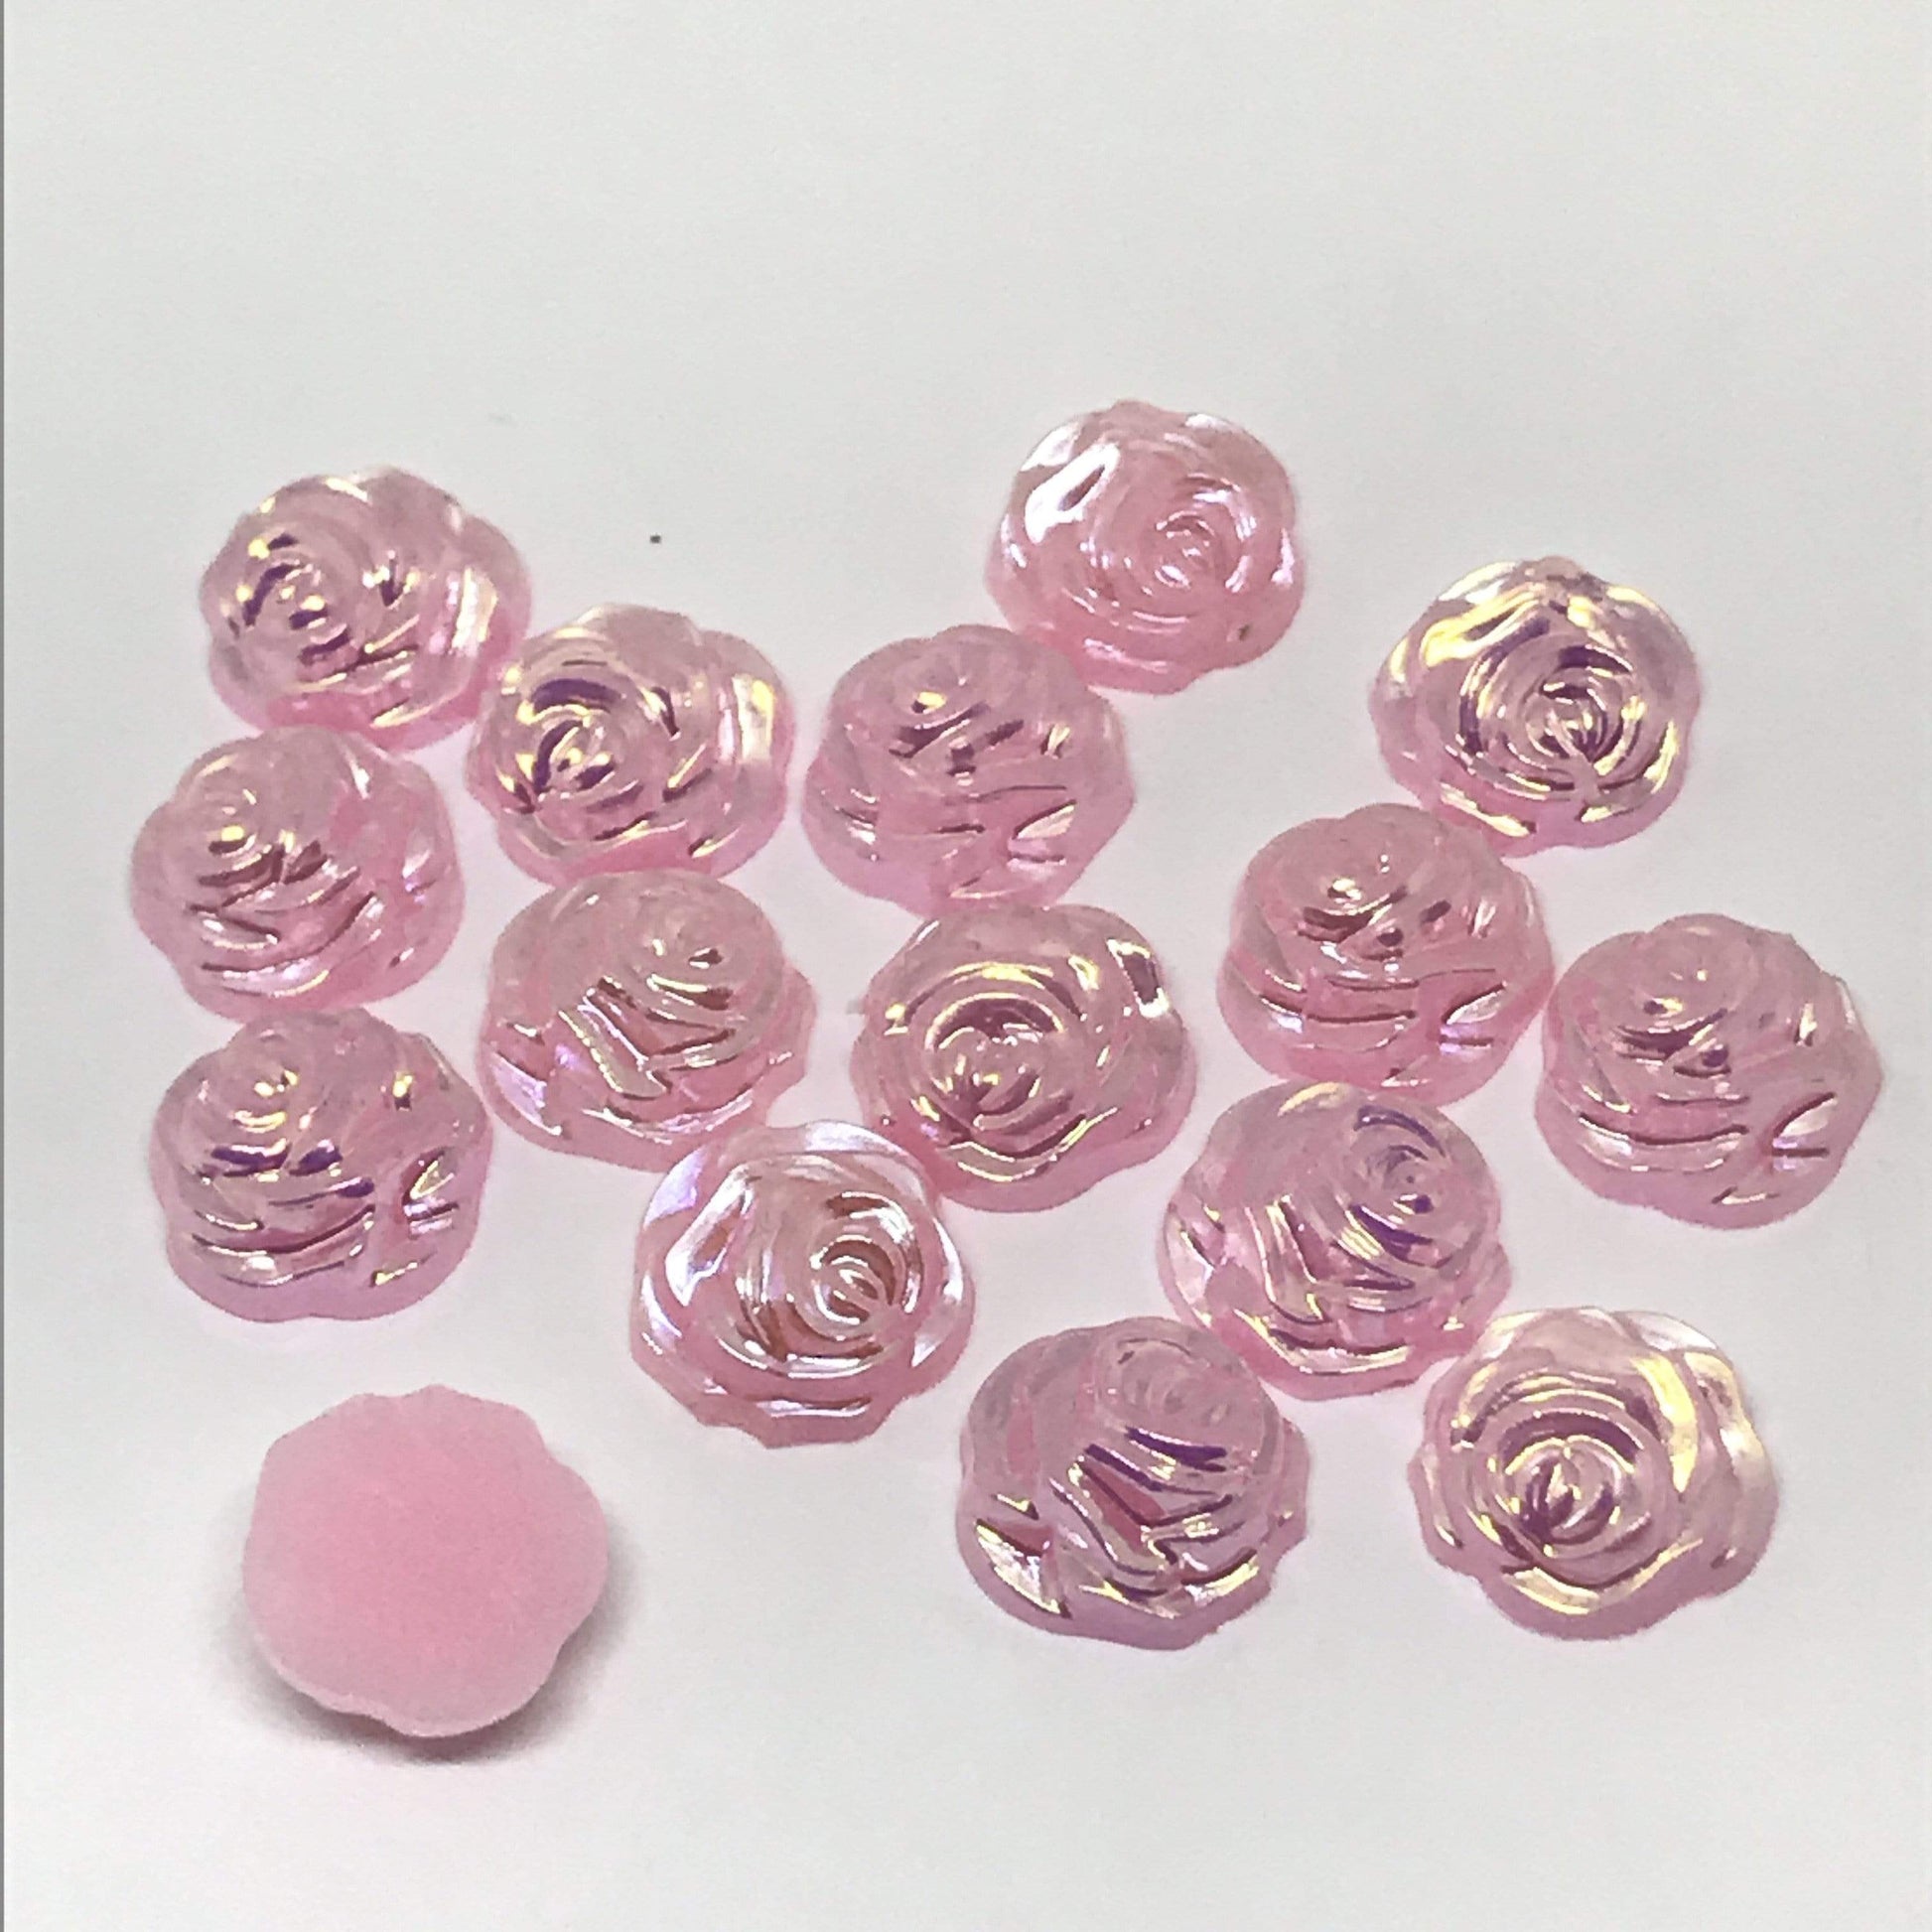 Sundaylace Creations & Bling Resin Gems Pink AB 13mm Pearl AB Rose Shaped Resin Gem, Glue on